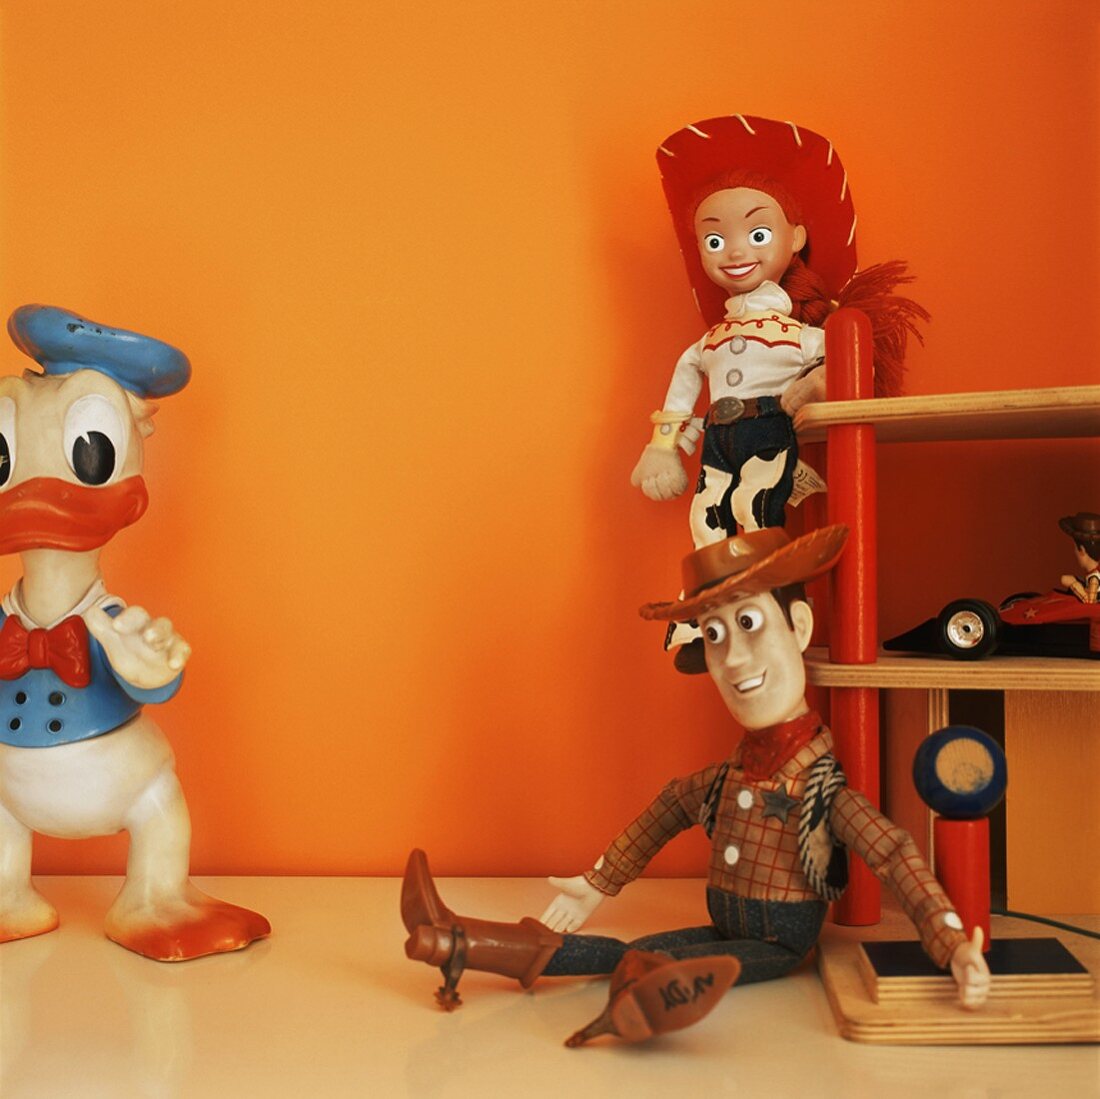 Comicfiguren, Donald Duck im … – Bild kaufen – 345510 ❘ living4media